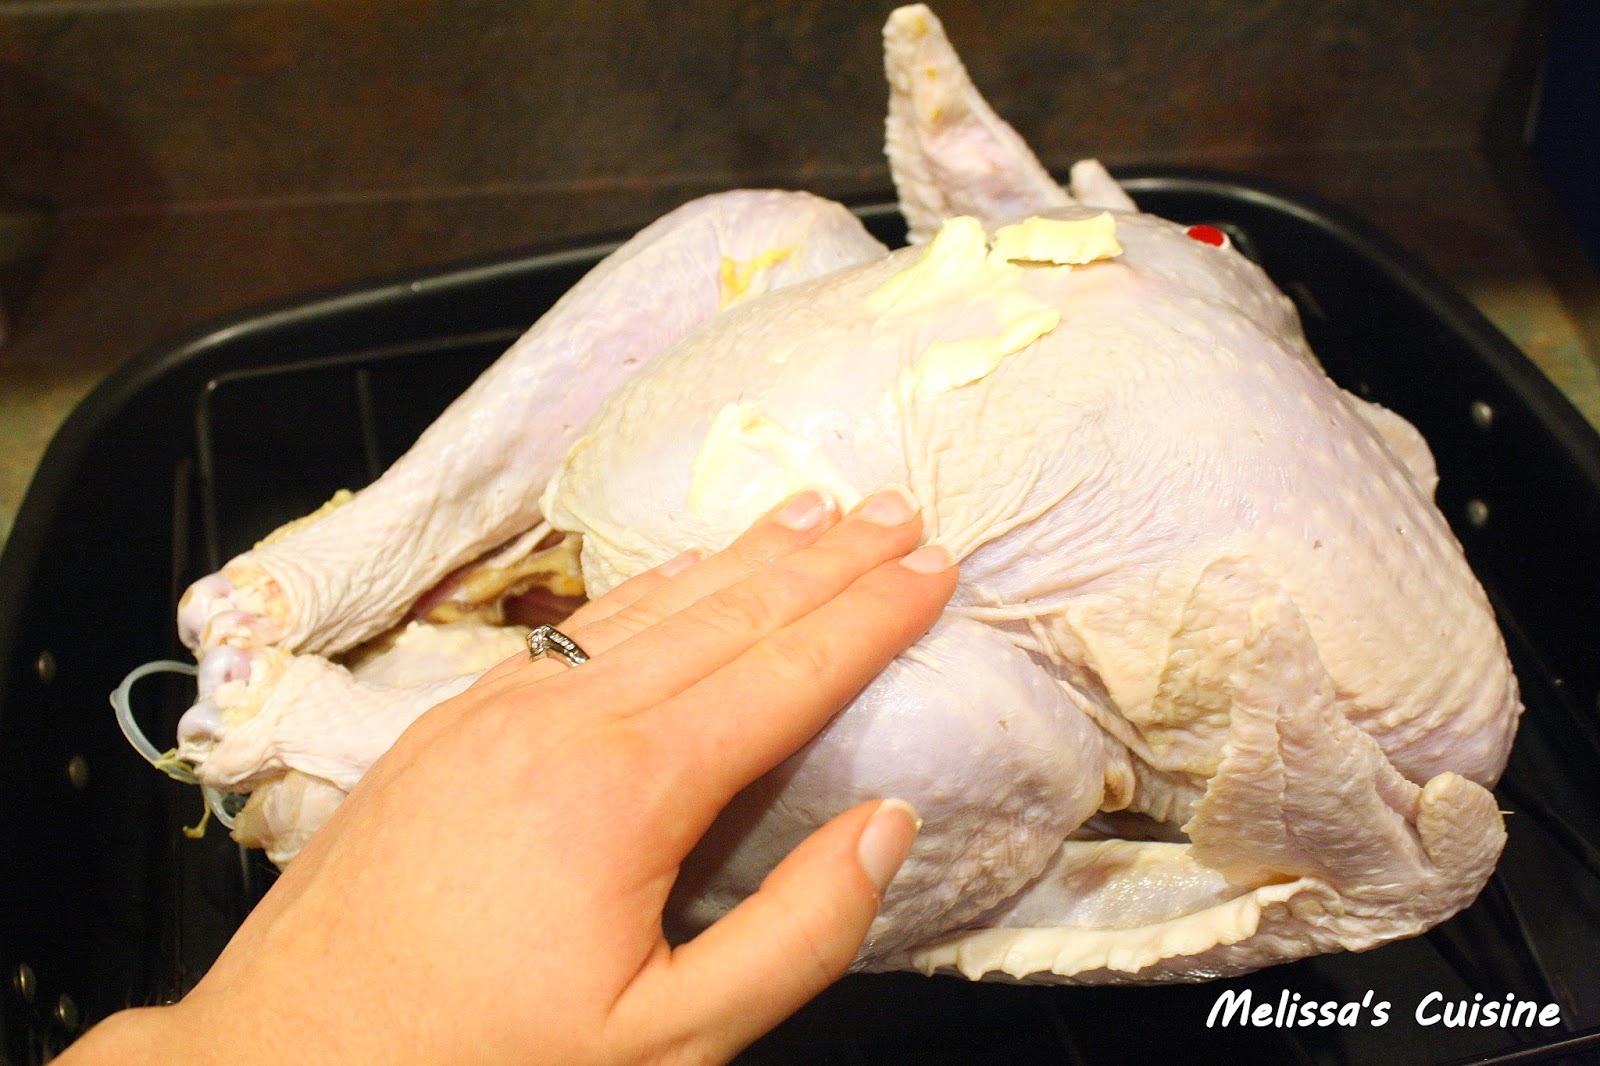 Melissa's Cuisine: The Perfect Thanksgiving Turkey